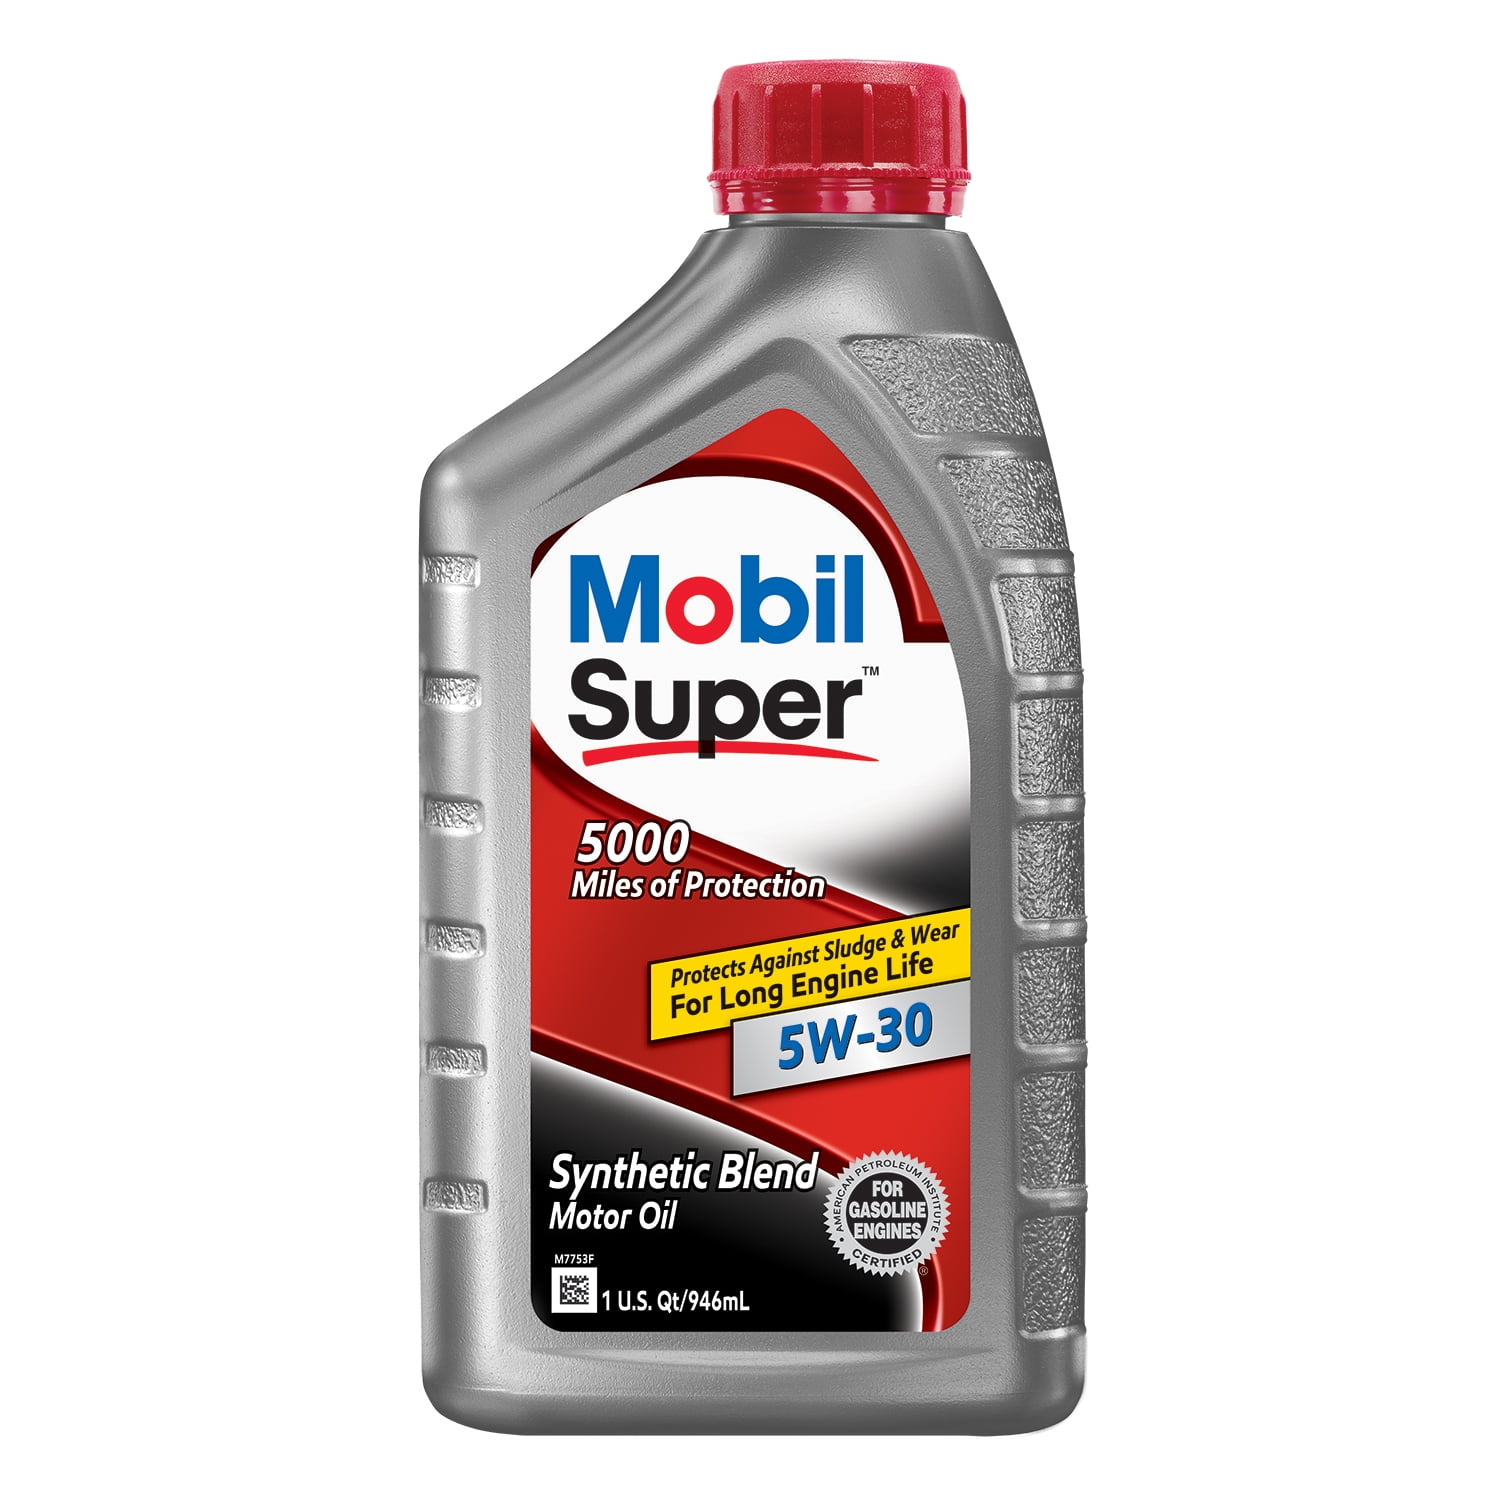 Buy Mobil Super Synthetic Blend Motor Oil 5W-30, 1 qt Online at Lowest .